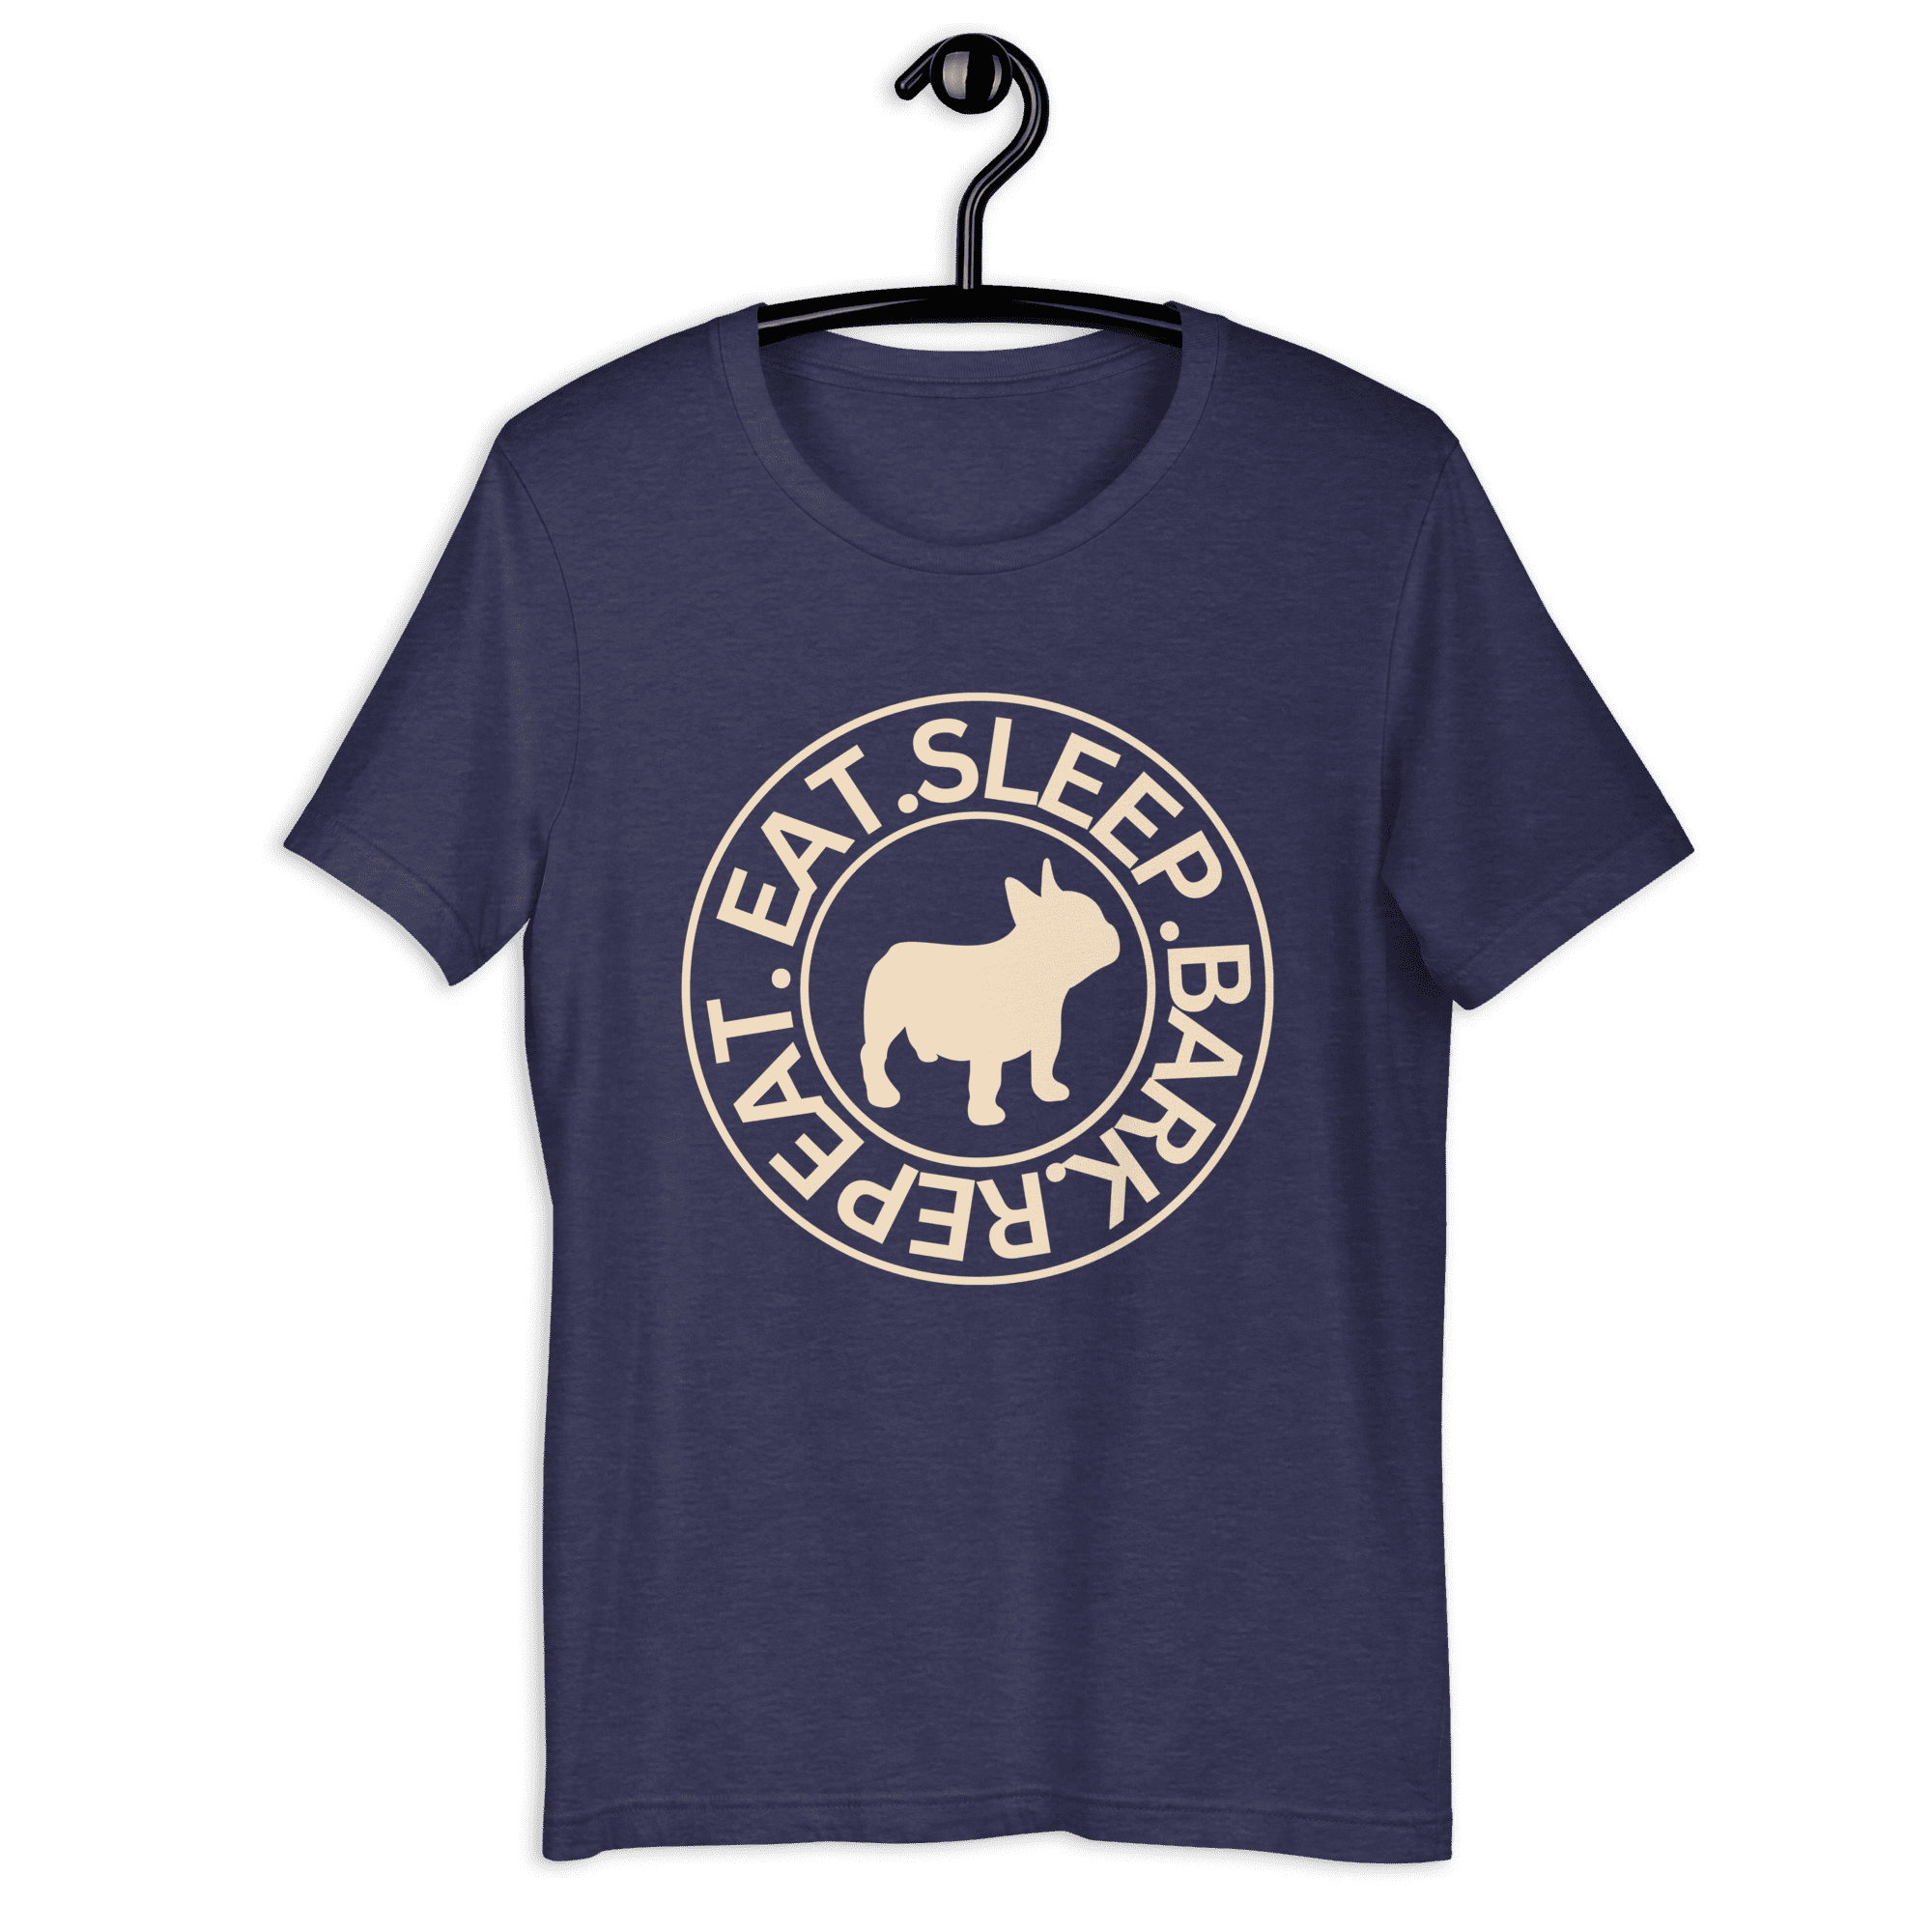 The "Eat Sleep Bark Repeat" French Bulldog Unisex T-Shirt. Midnight Navy